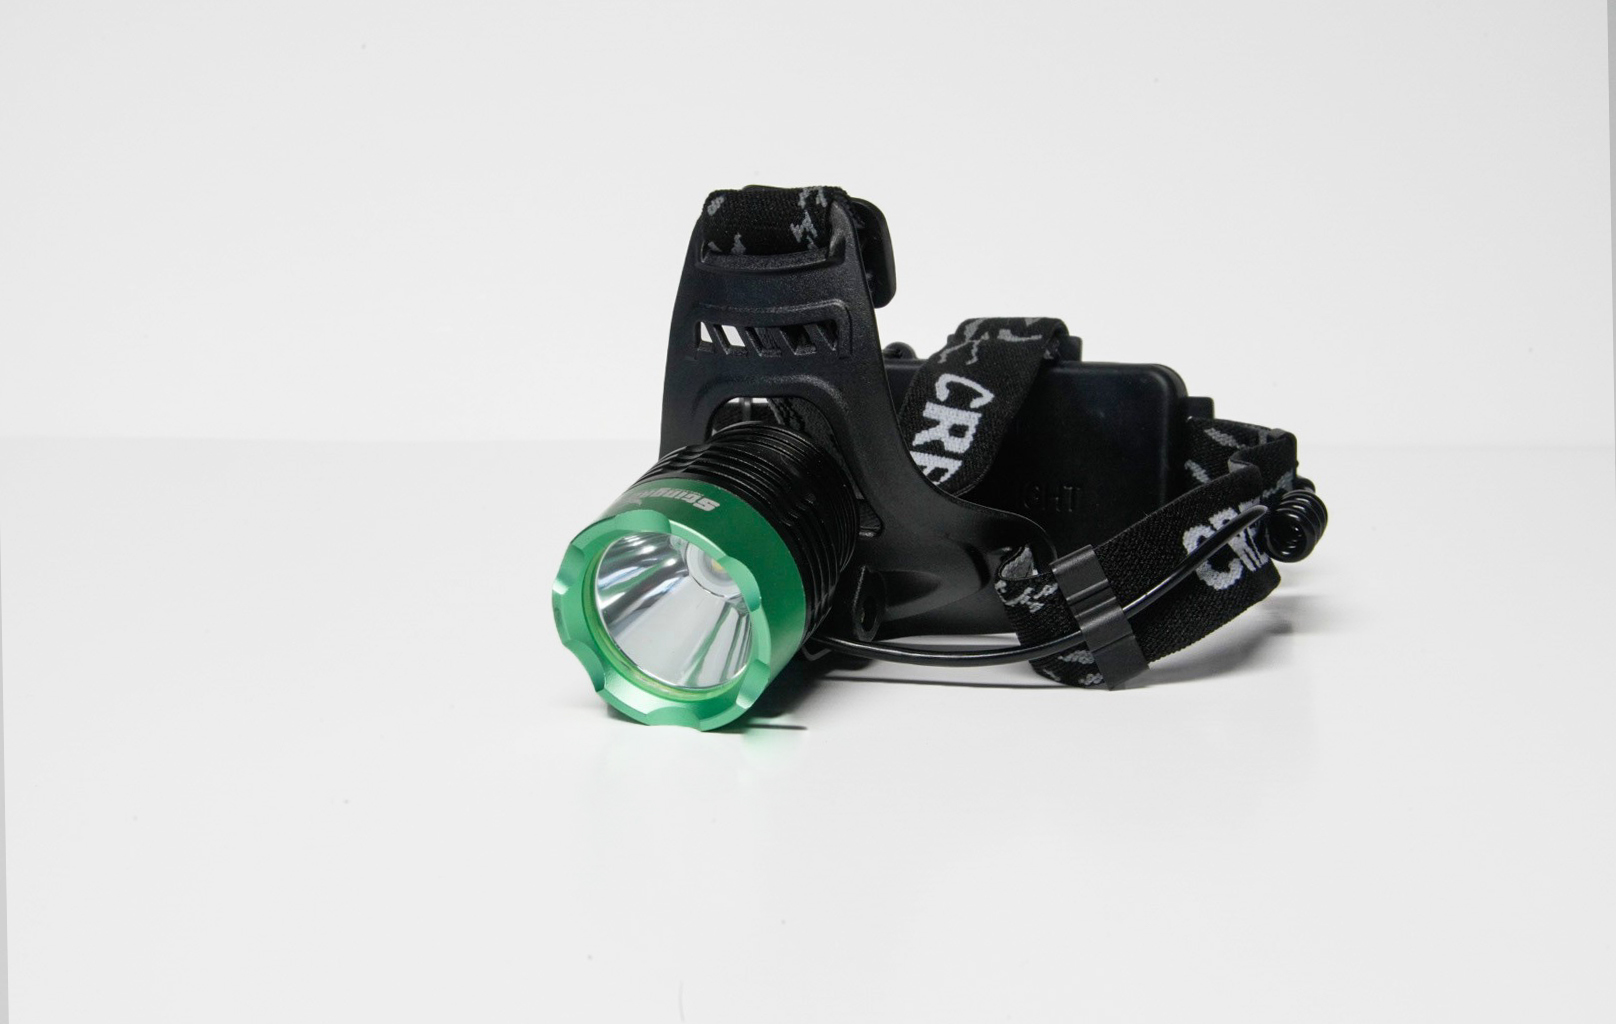 Mini Lantern - Stingray Industries LED, LLC